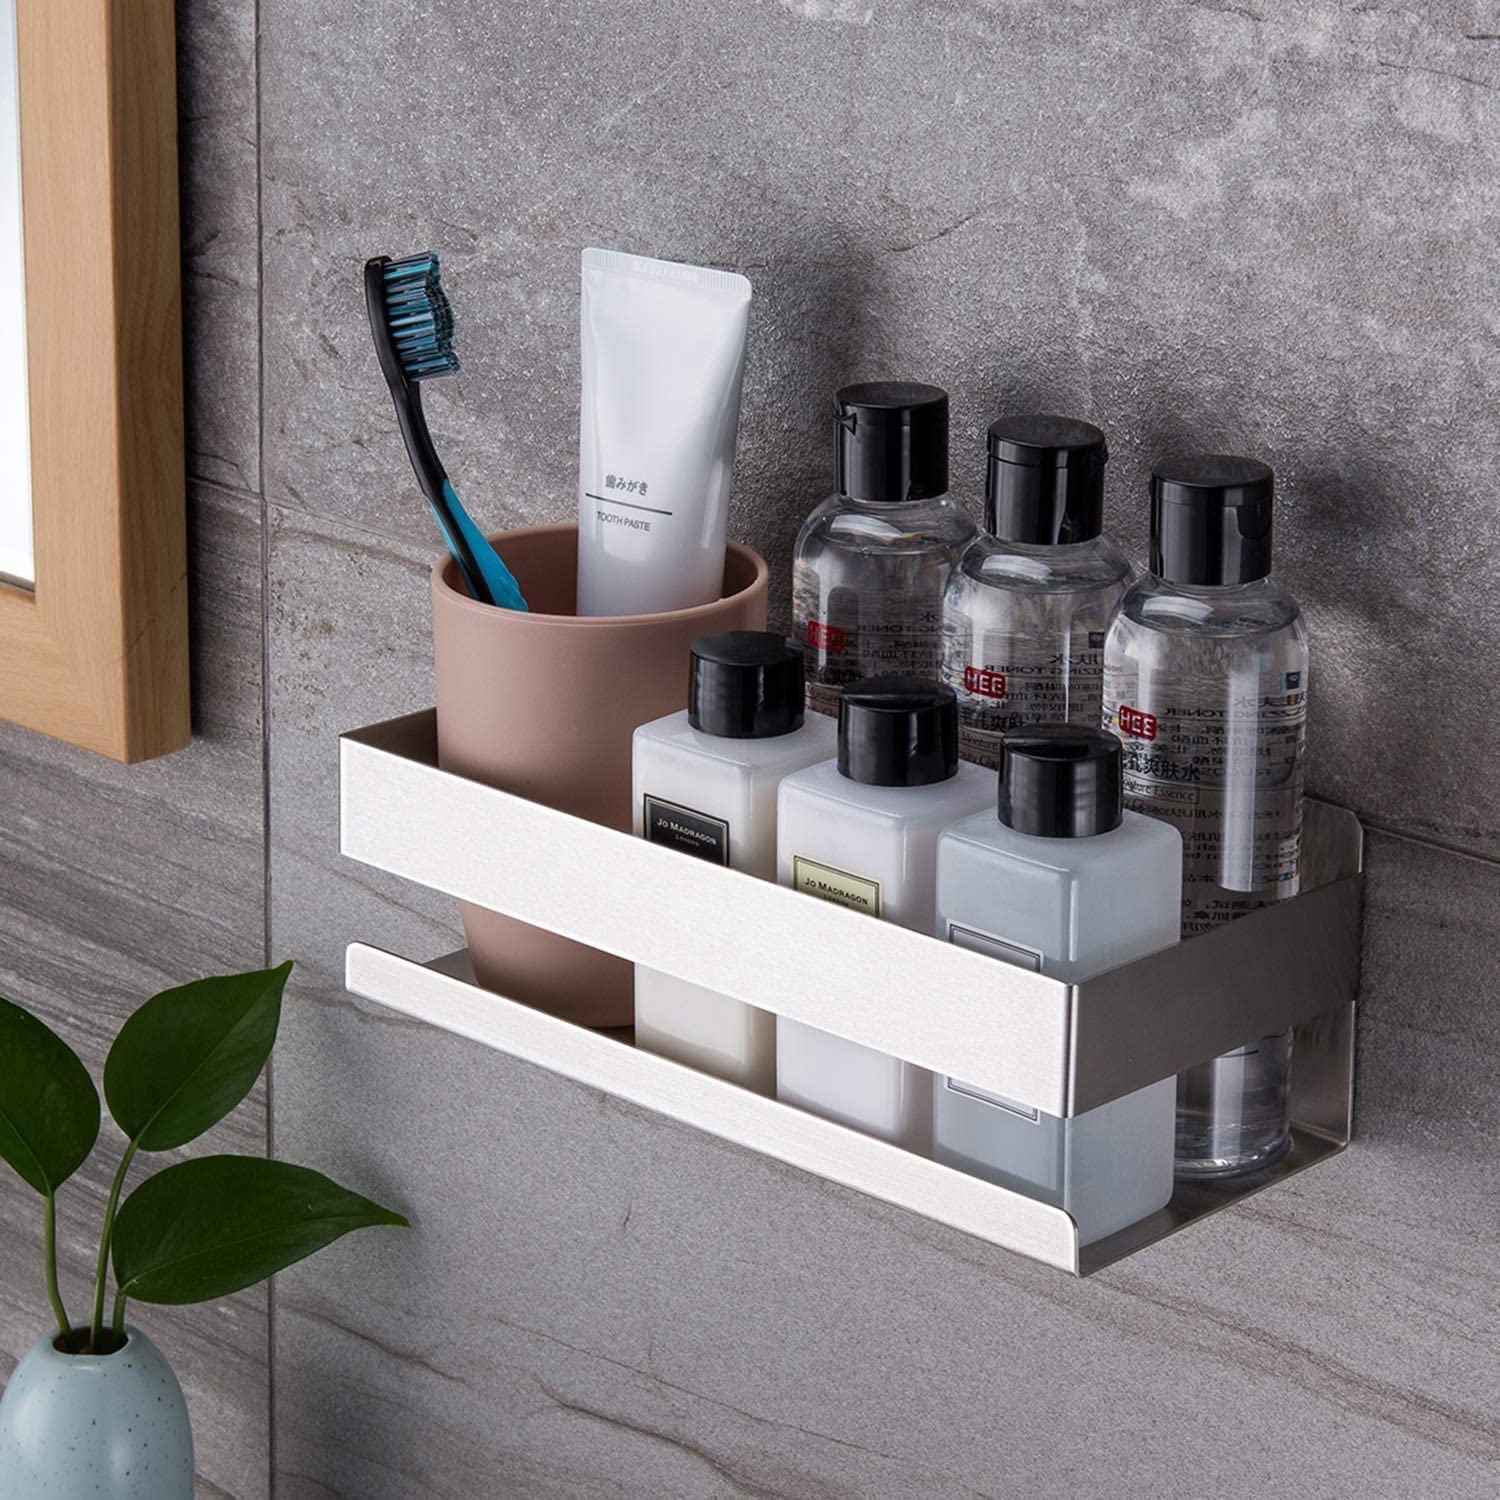 Homgen Shower Shelf with No Drilling Self Adhesive Shower Shelf